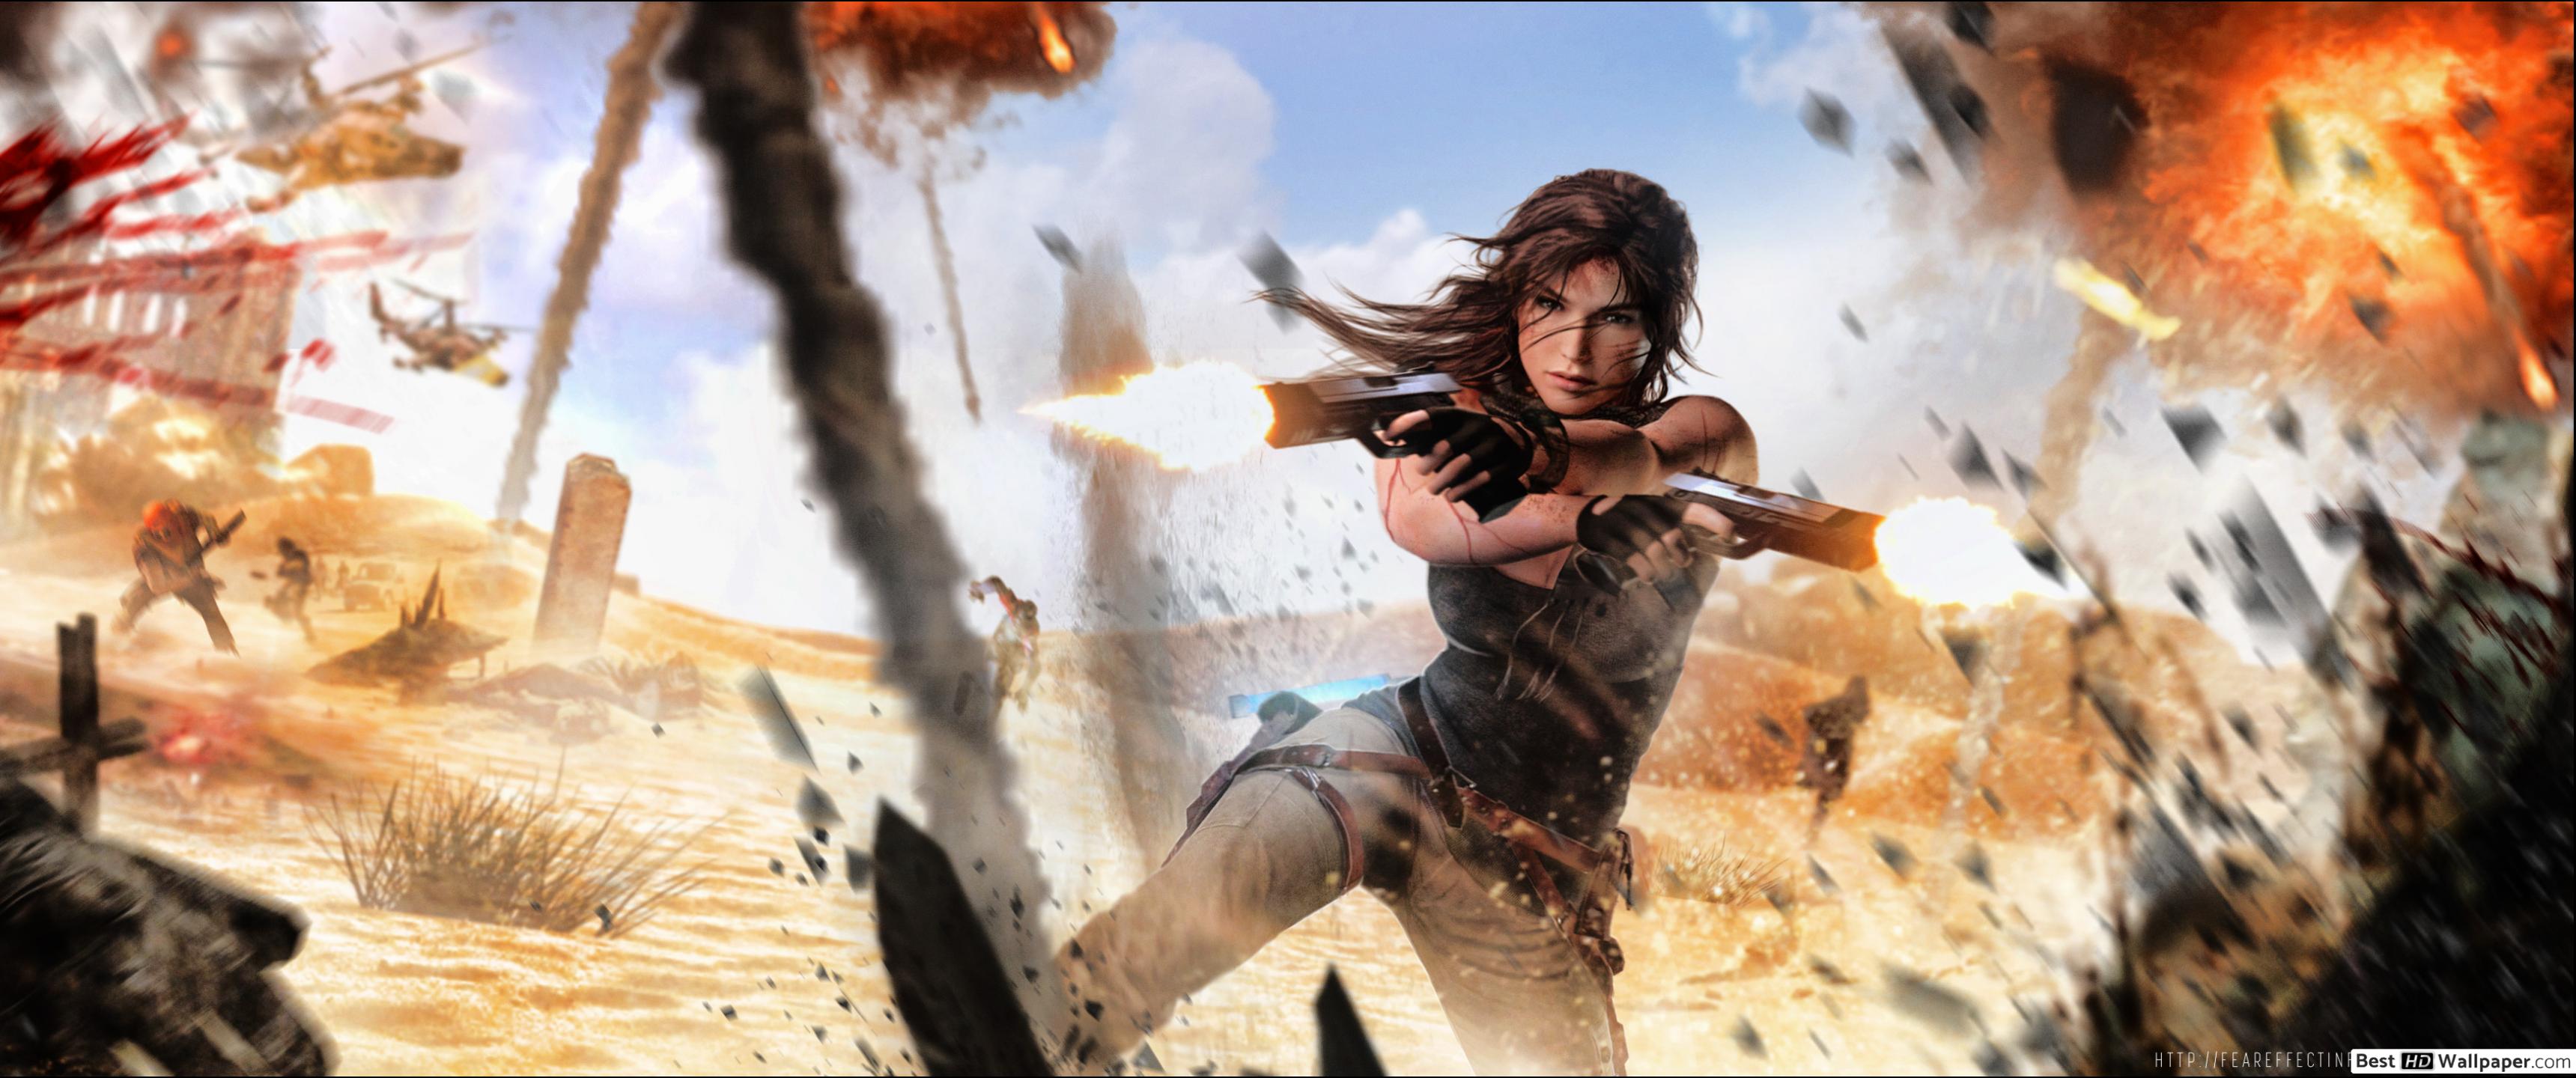 Shadow of the Tomb Raider: Zenith (2019) Croft (archer girl